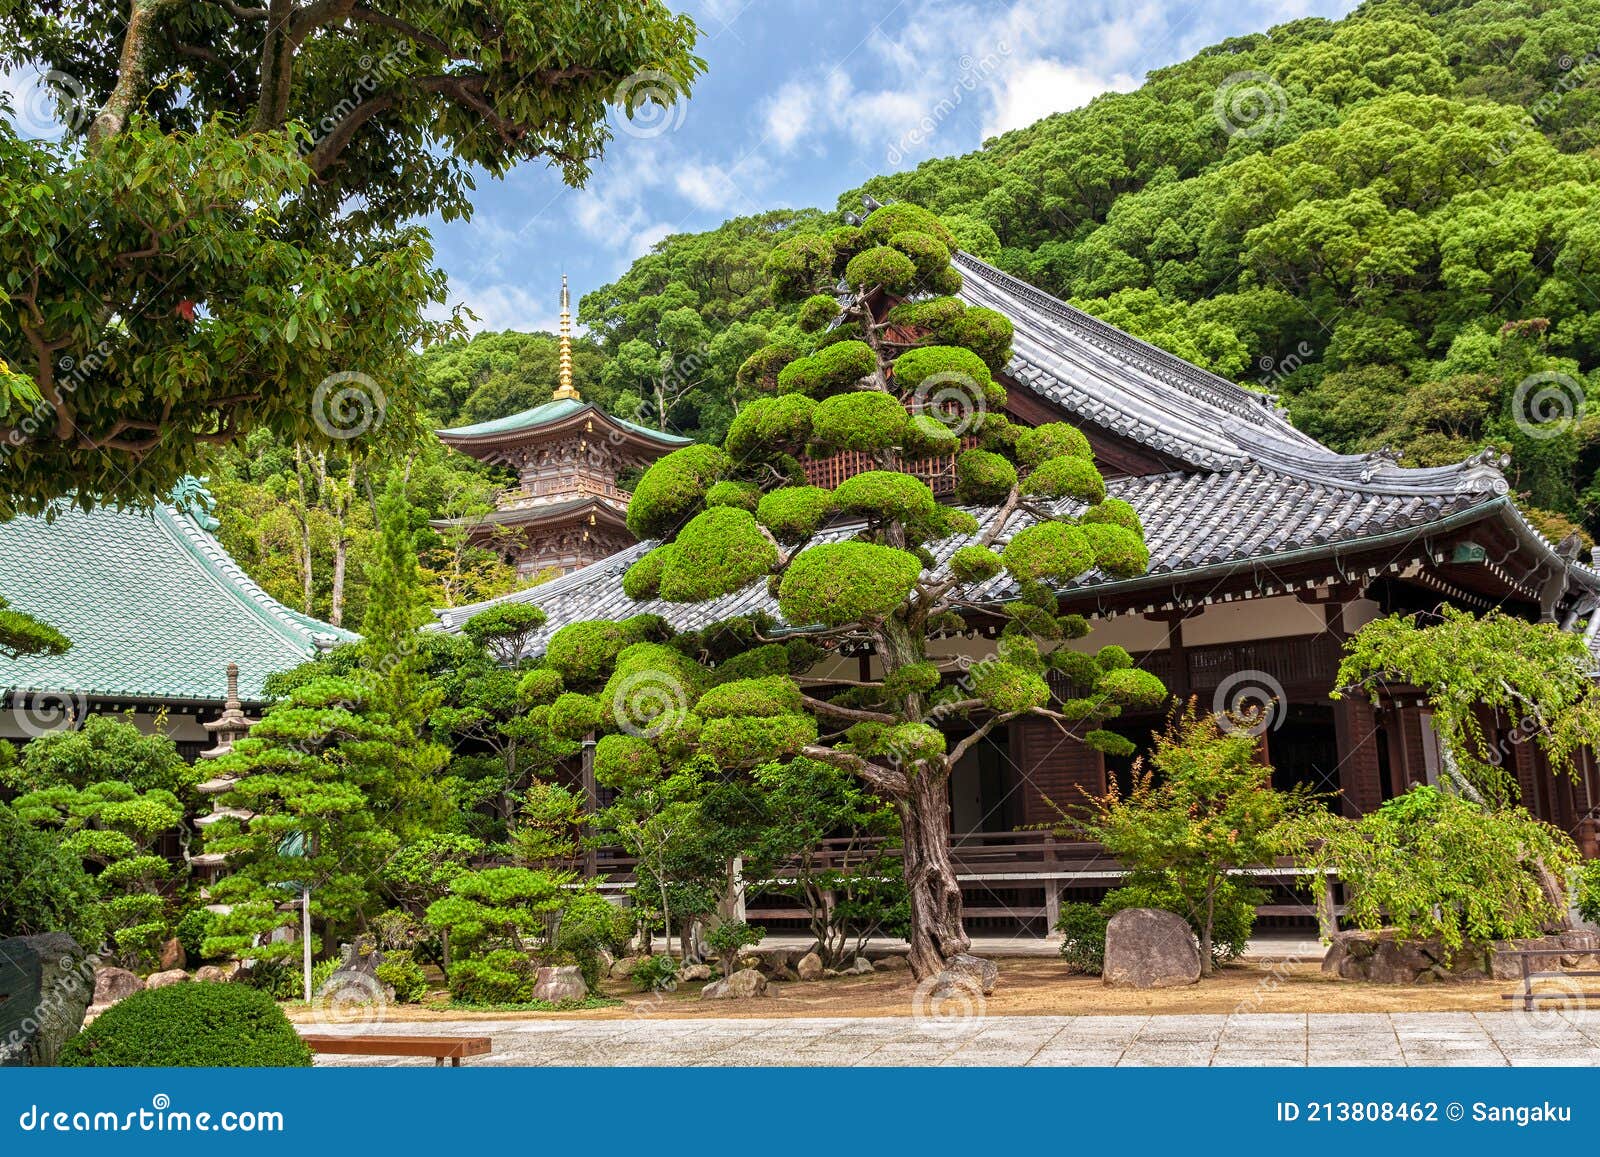 view of suma temple in kobe, japan